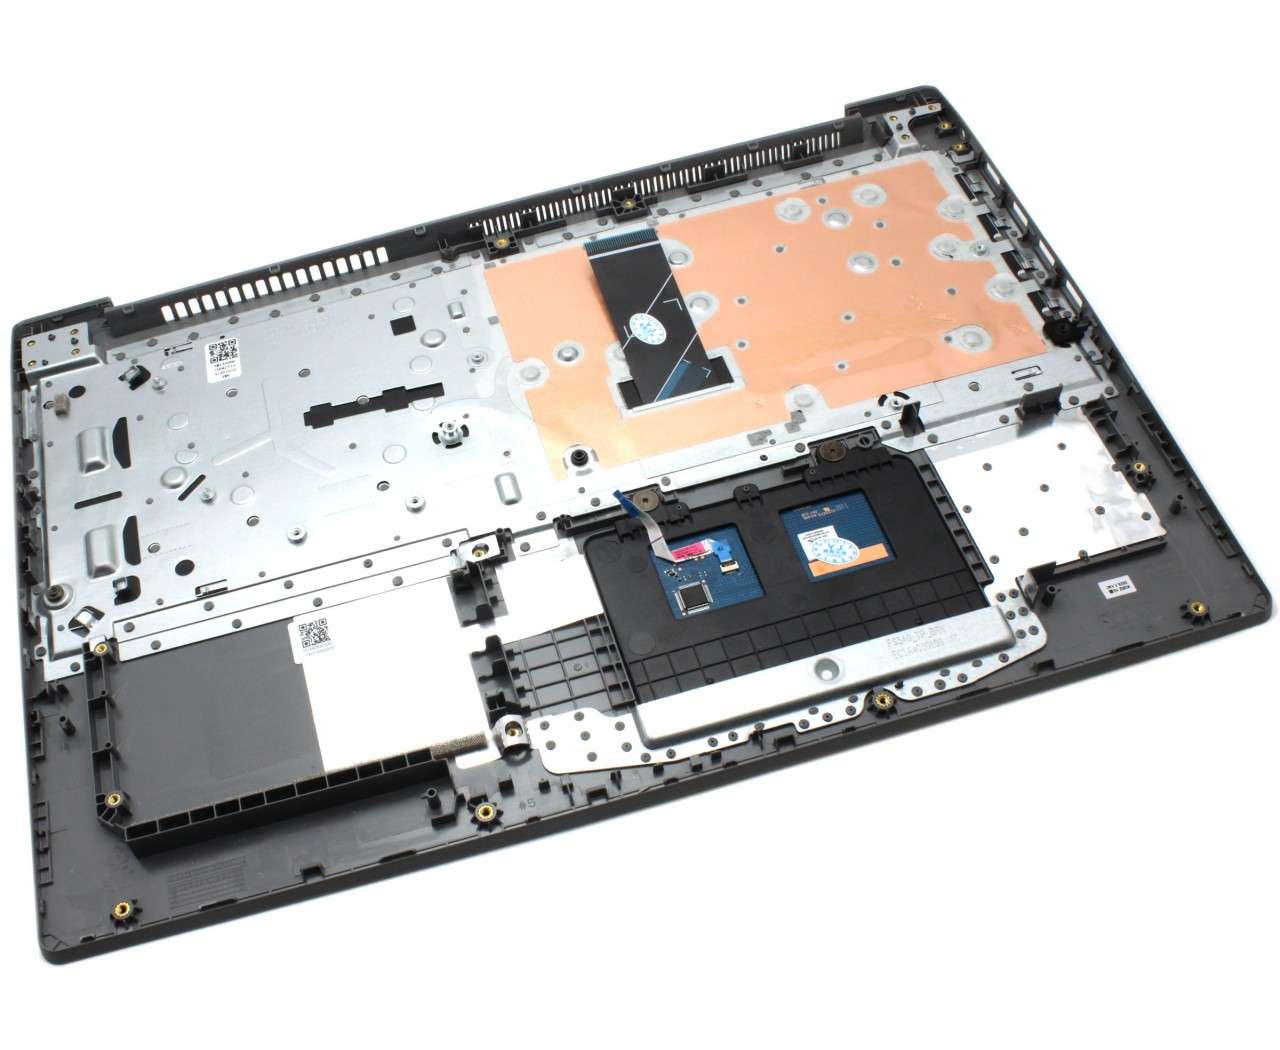 Tastatura Lenovo W125687982 Neagra cu Palmrest Argintiu si TouchPad